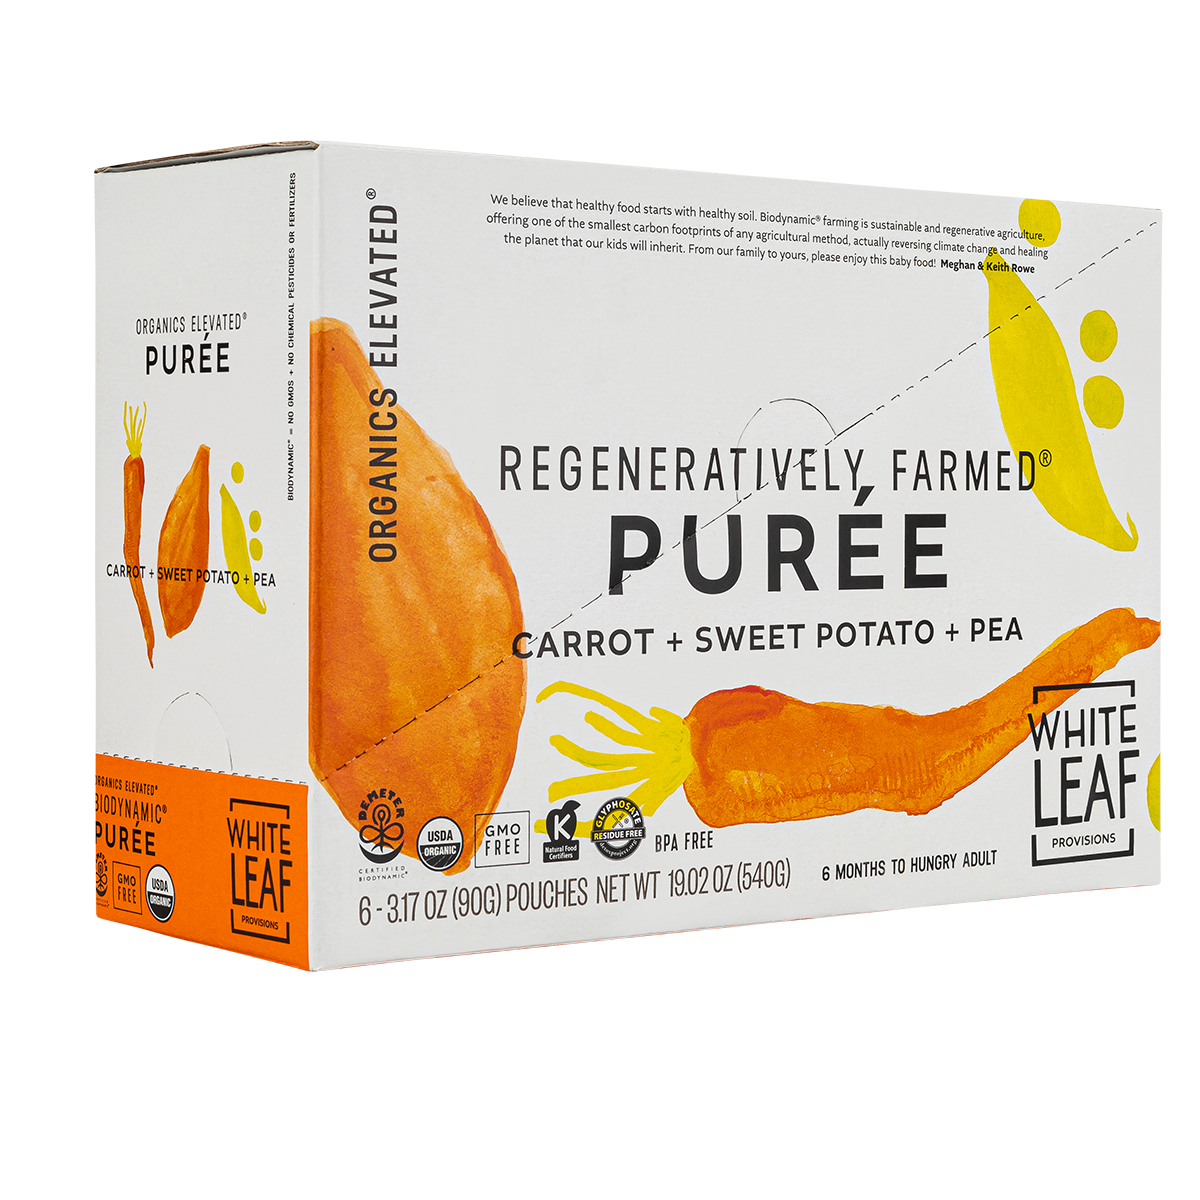 Organic, regeneratively farmed Puree - Carrot + Sweet Potato + Pea